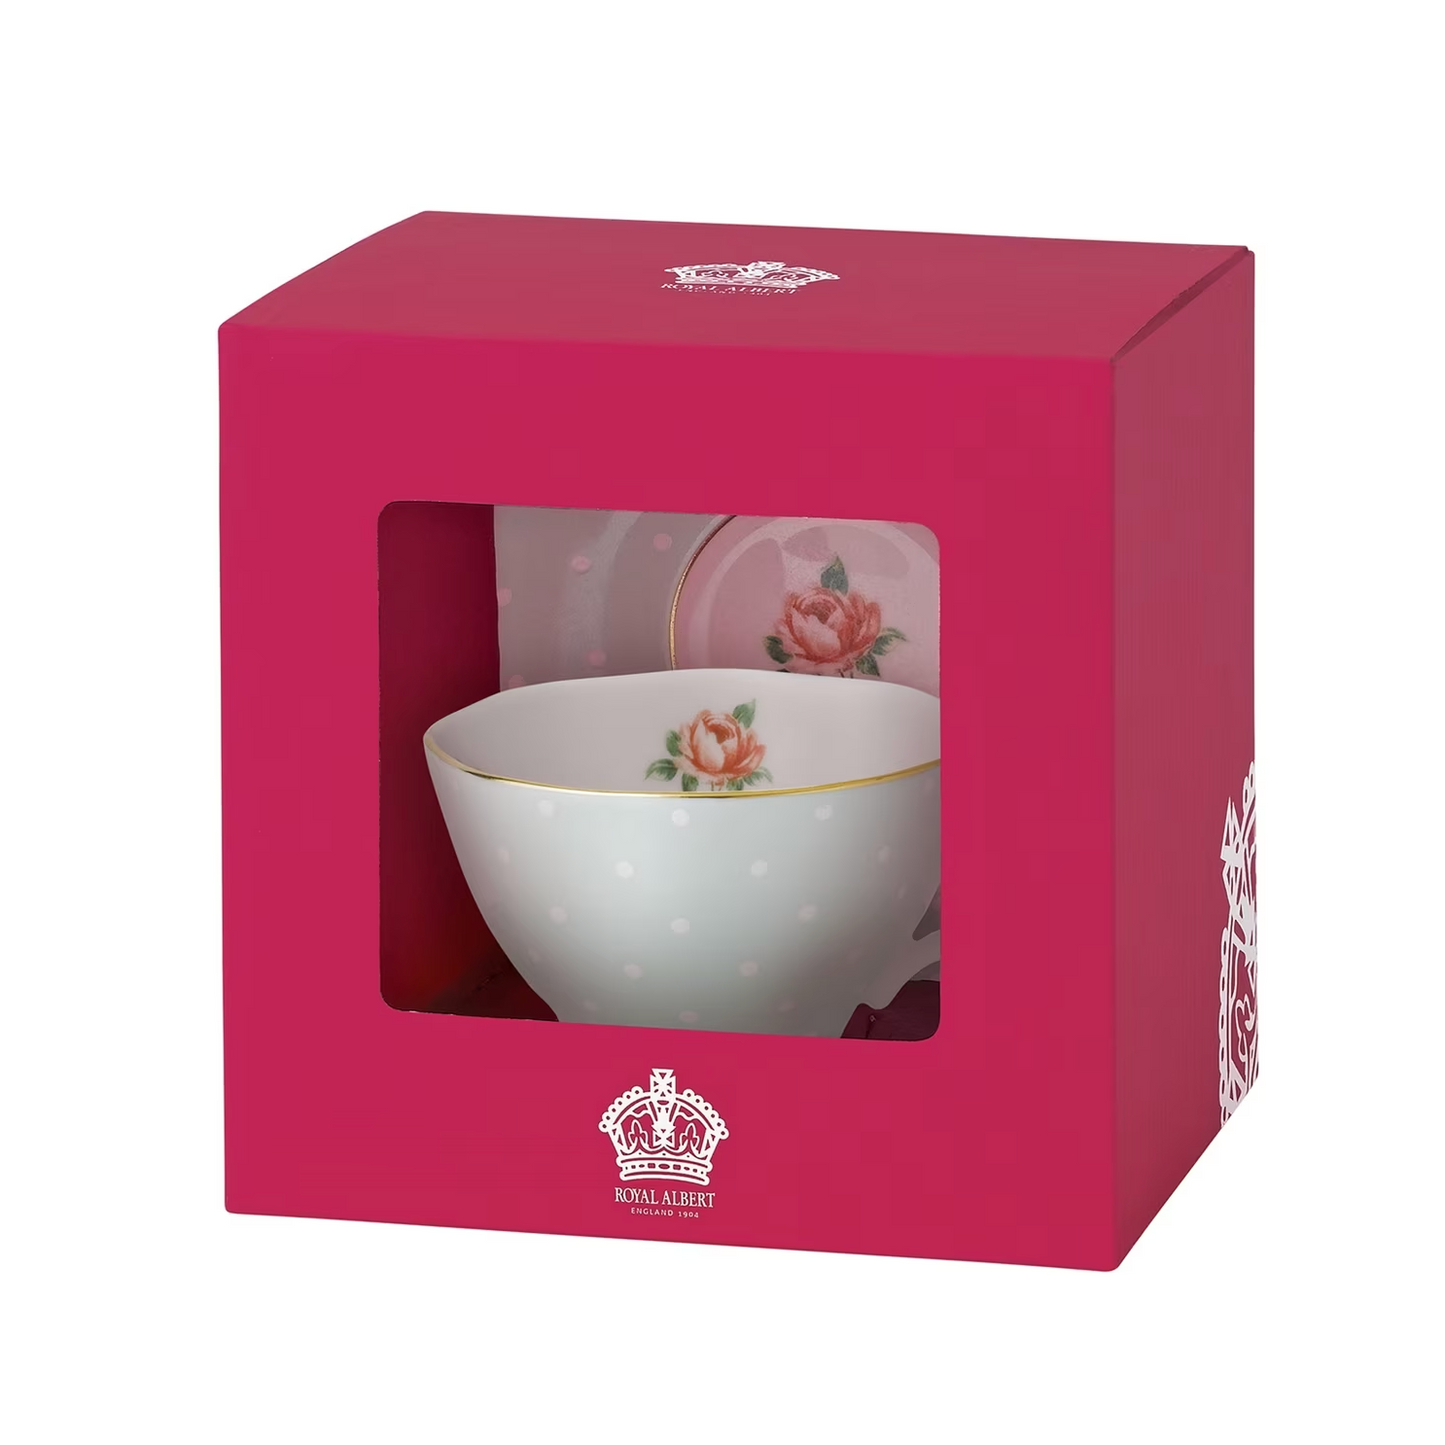 Royal Albert Polka Rose Vintage Teacup and Saucer Gift Boxed